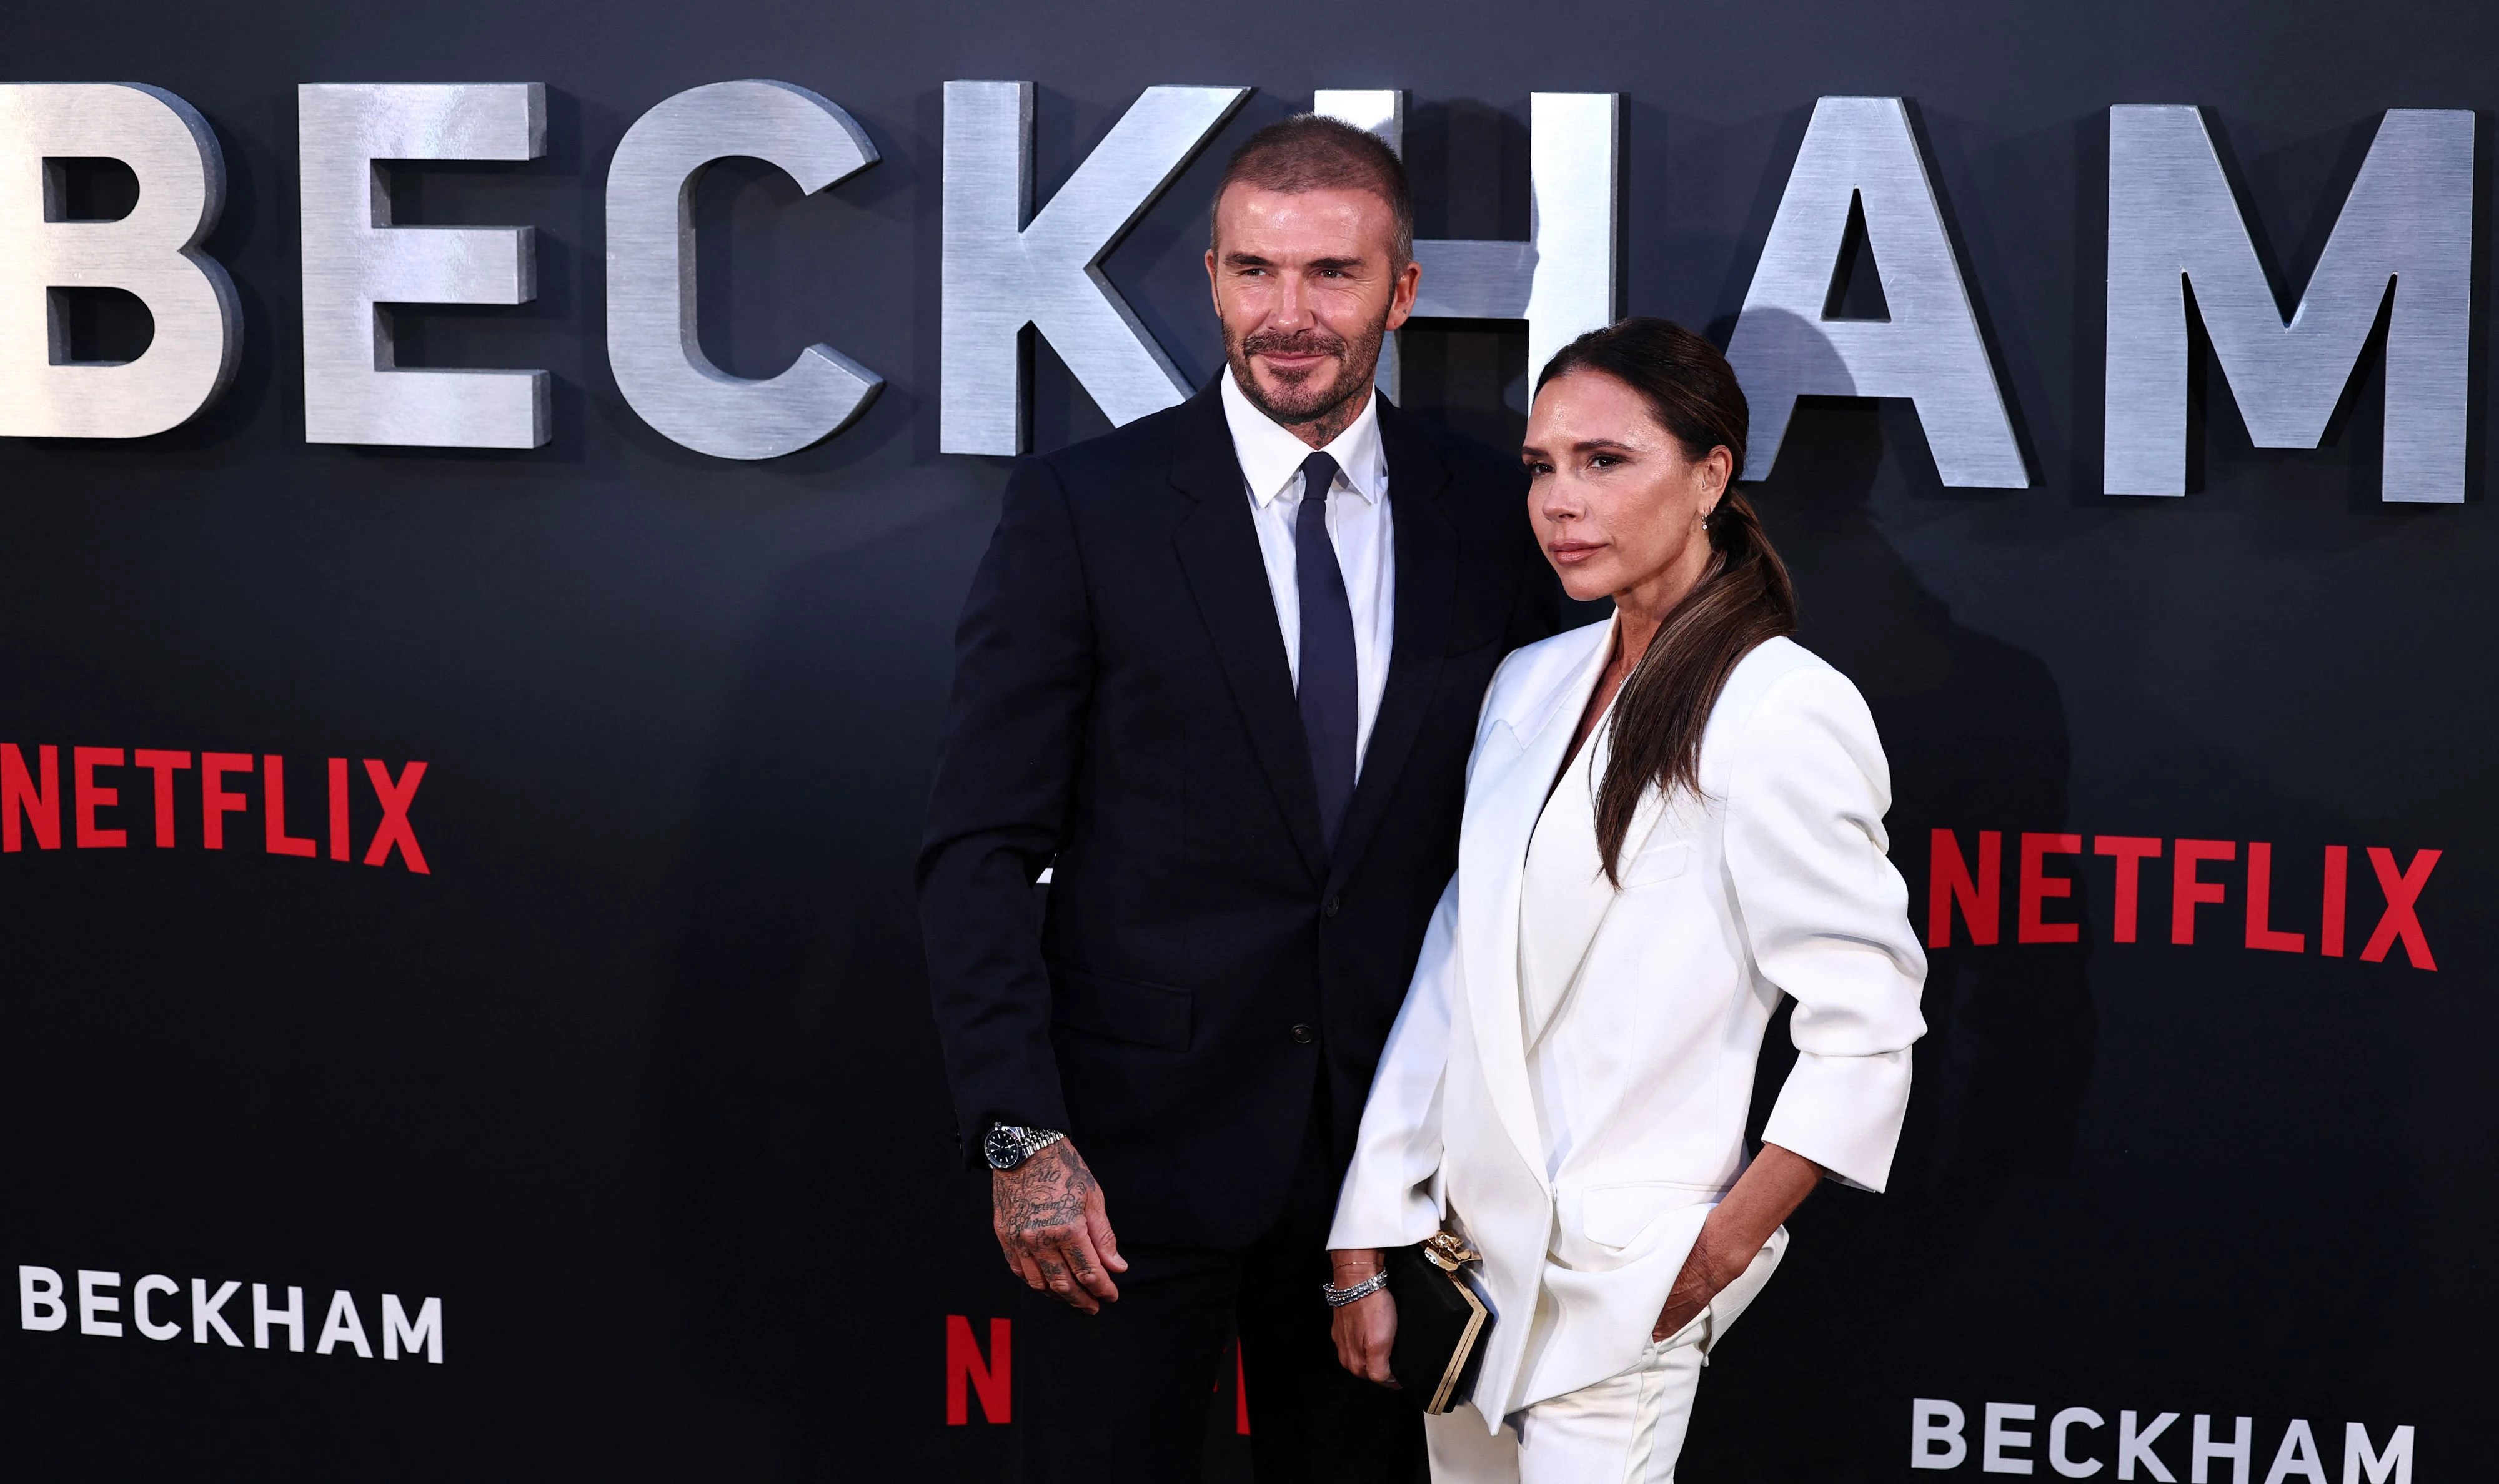 Beckham Documentary